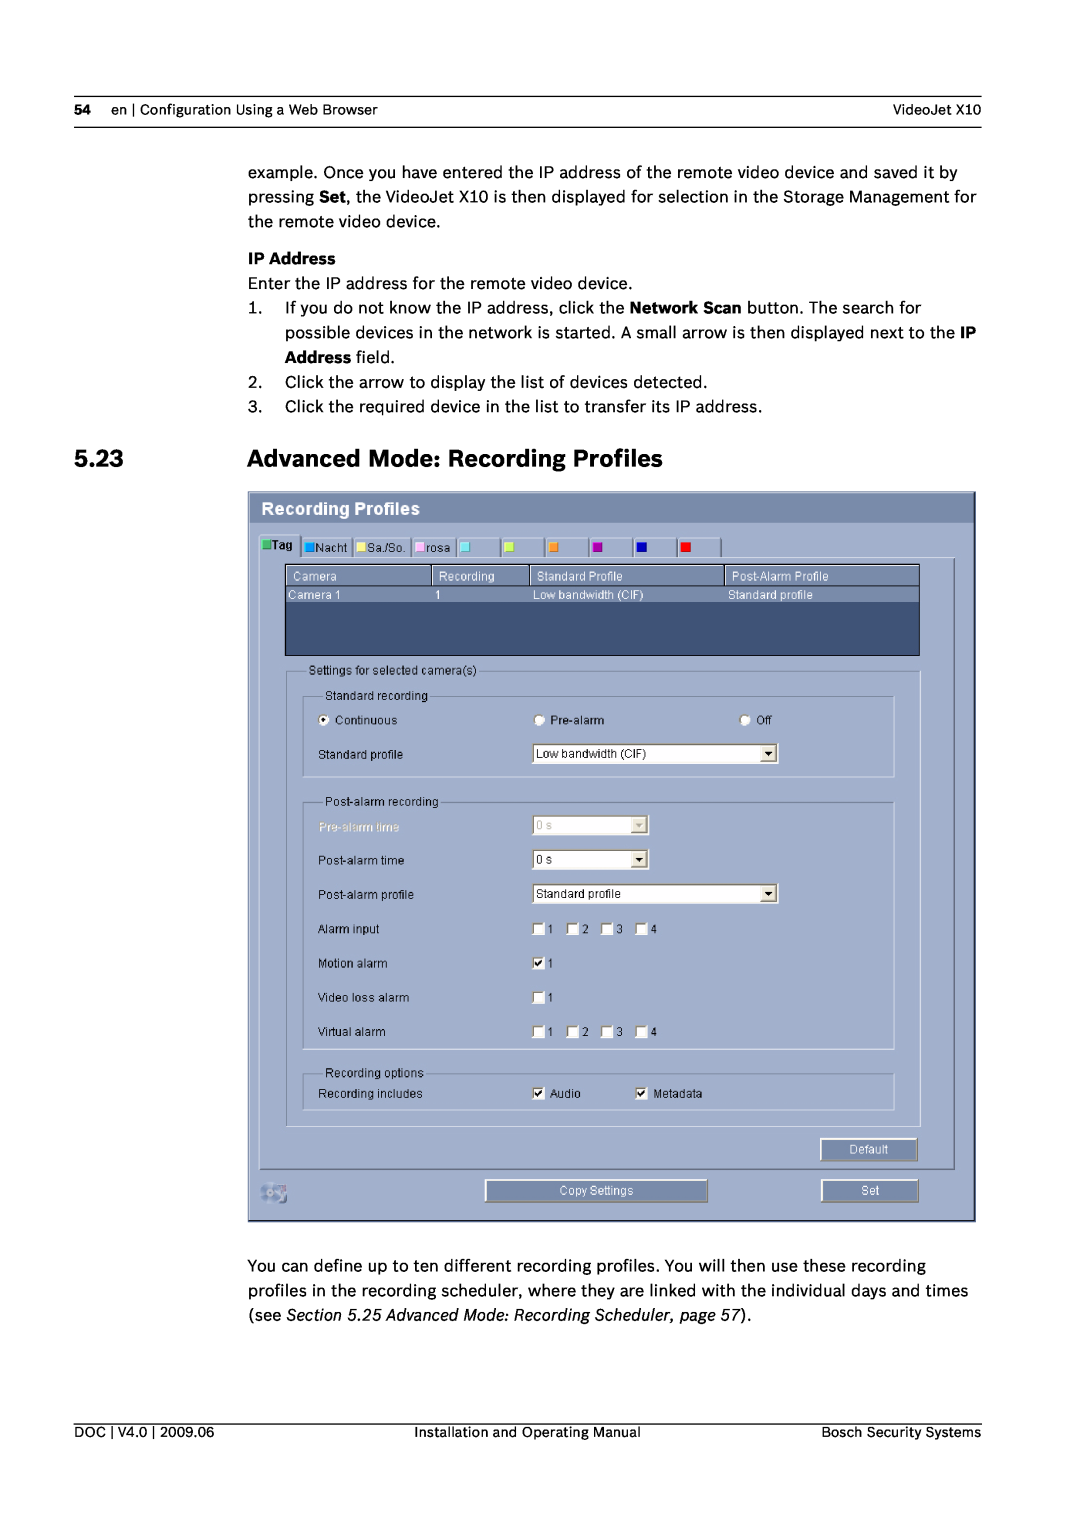 Bosch Appliances X10 manual 5.23, Advanced Mode Recording Profiles, IP Address 